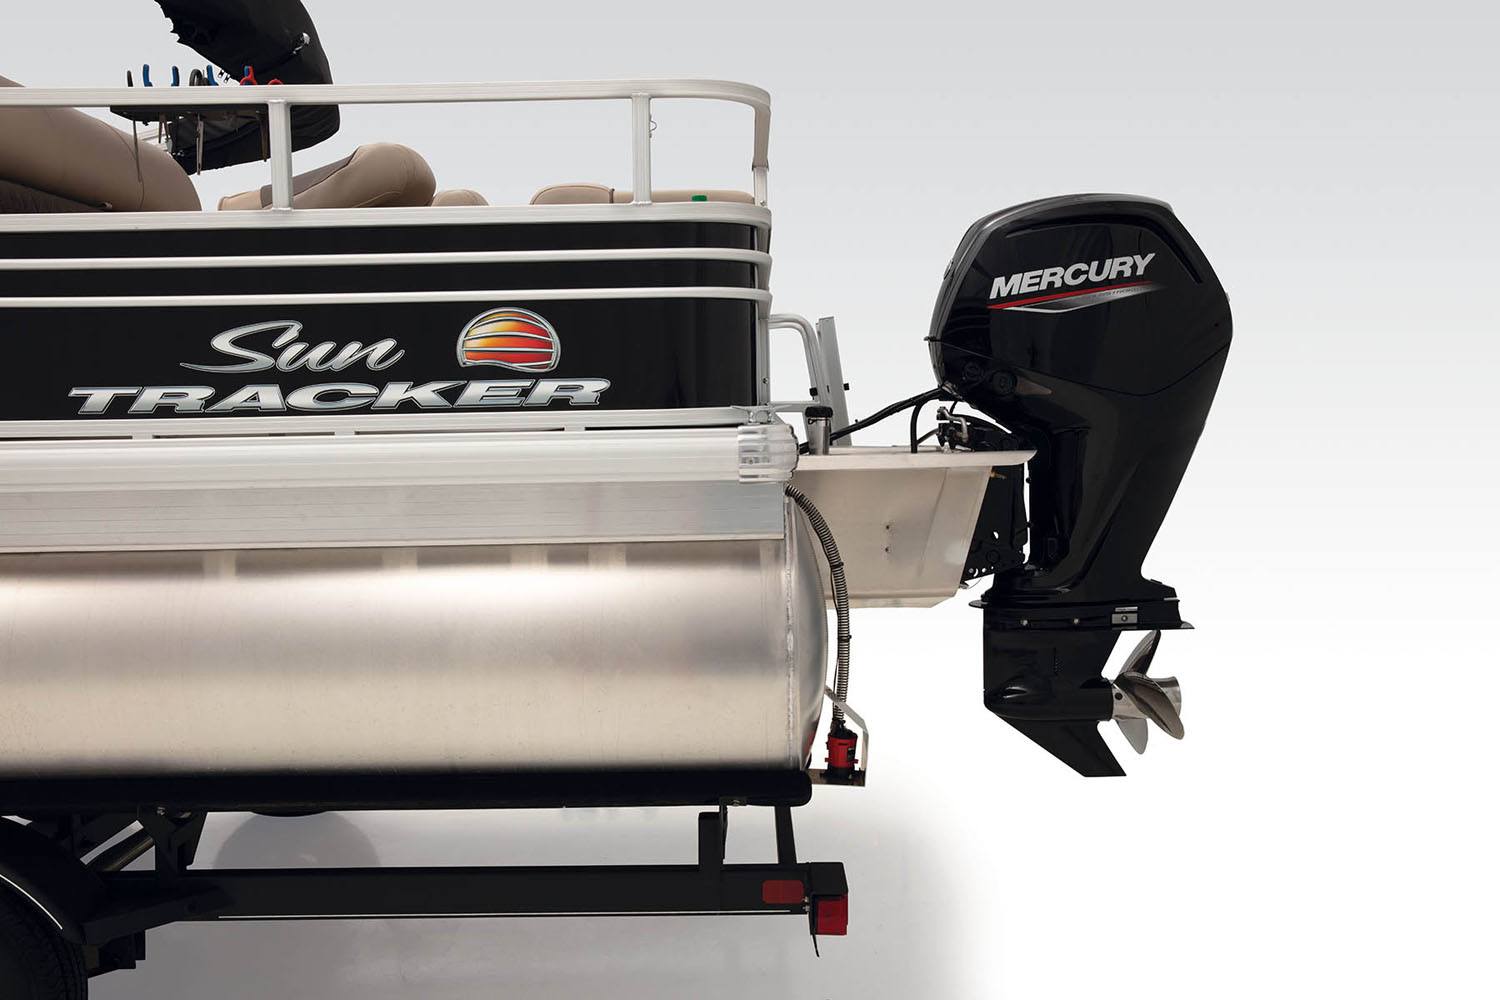 2022 Sun Tracker Fishin' Barge 24 DLX in Eastland, Texas